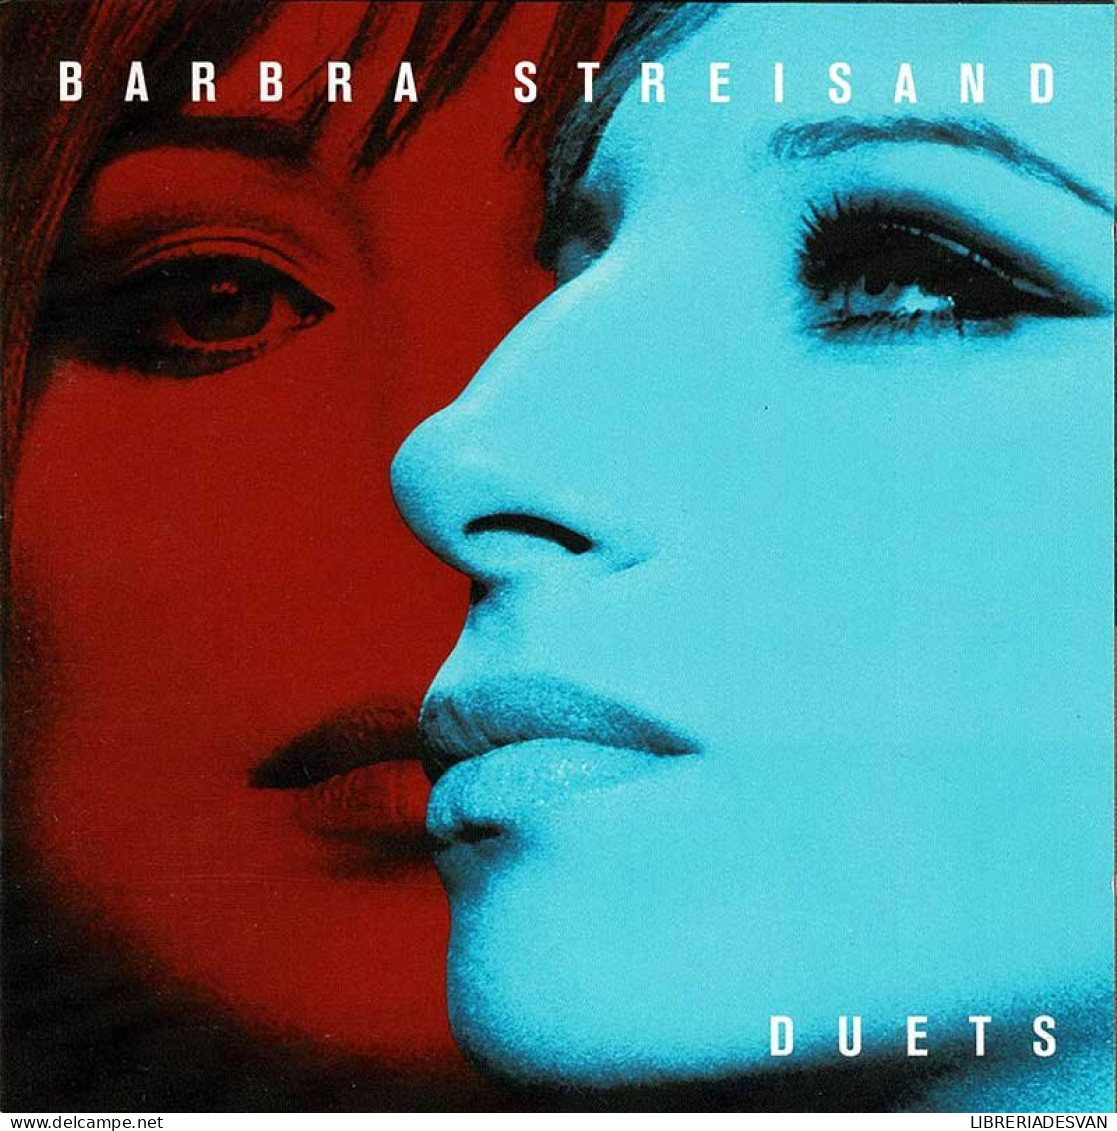 Barbra Streisand - Duets. CD - Disco & Pop